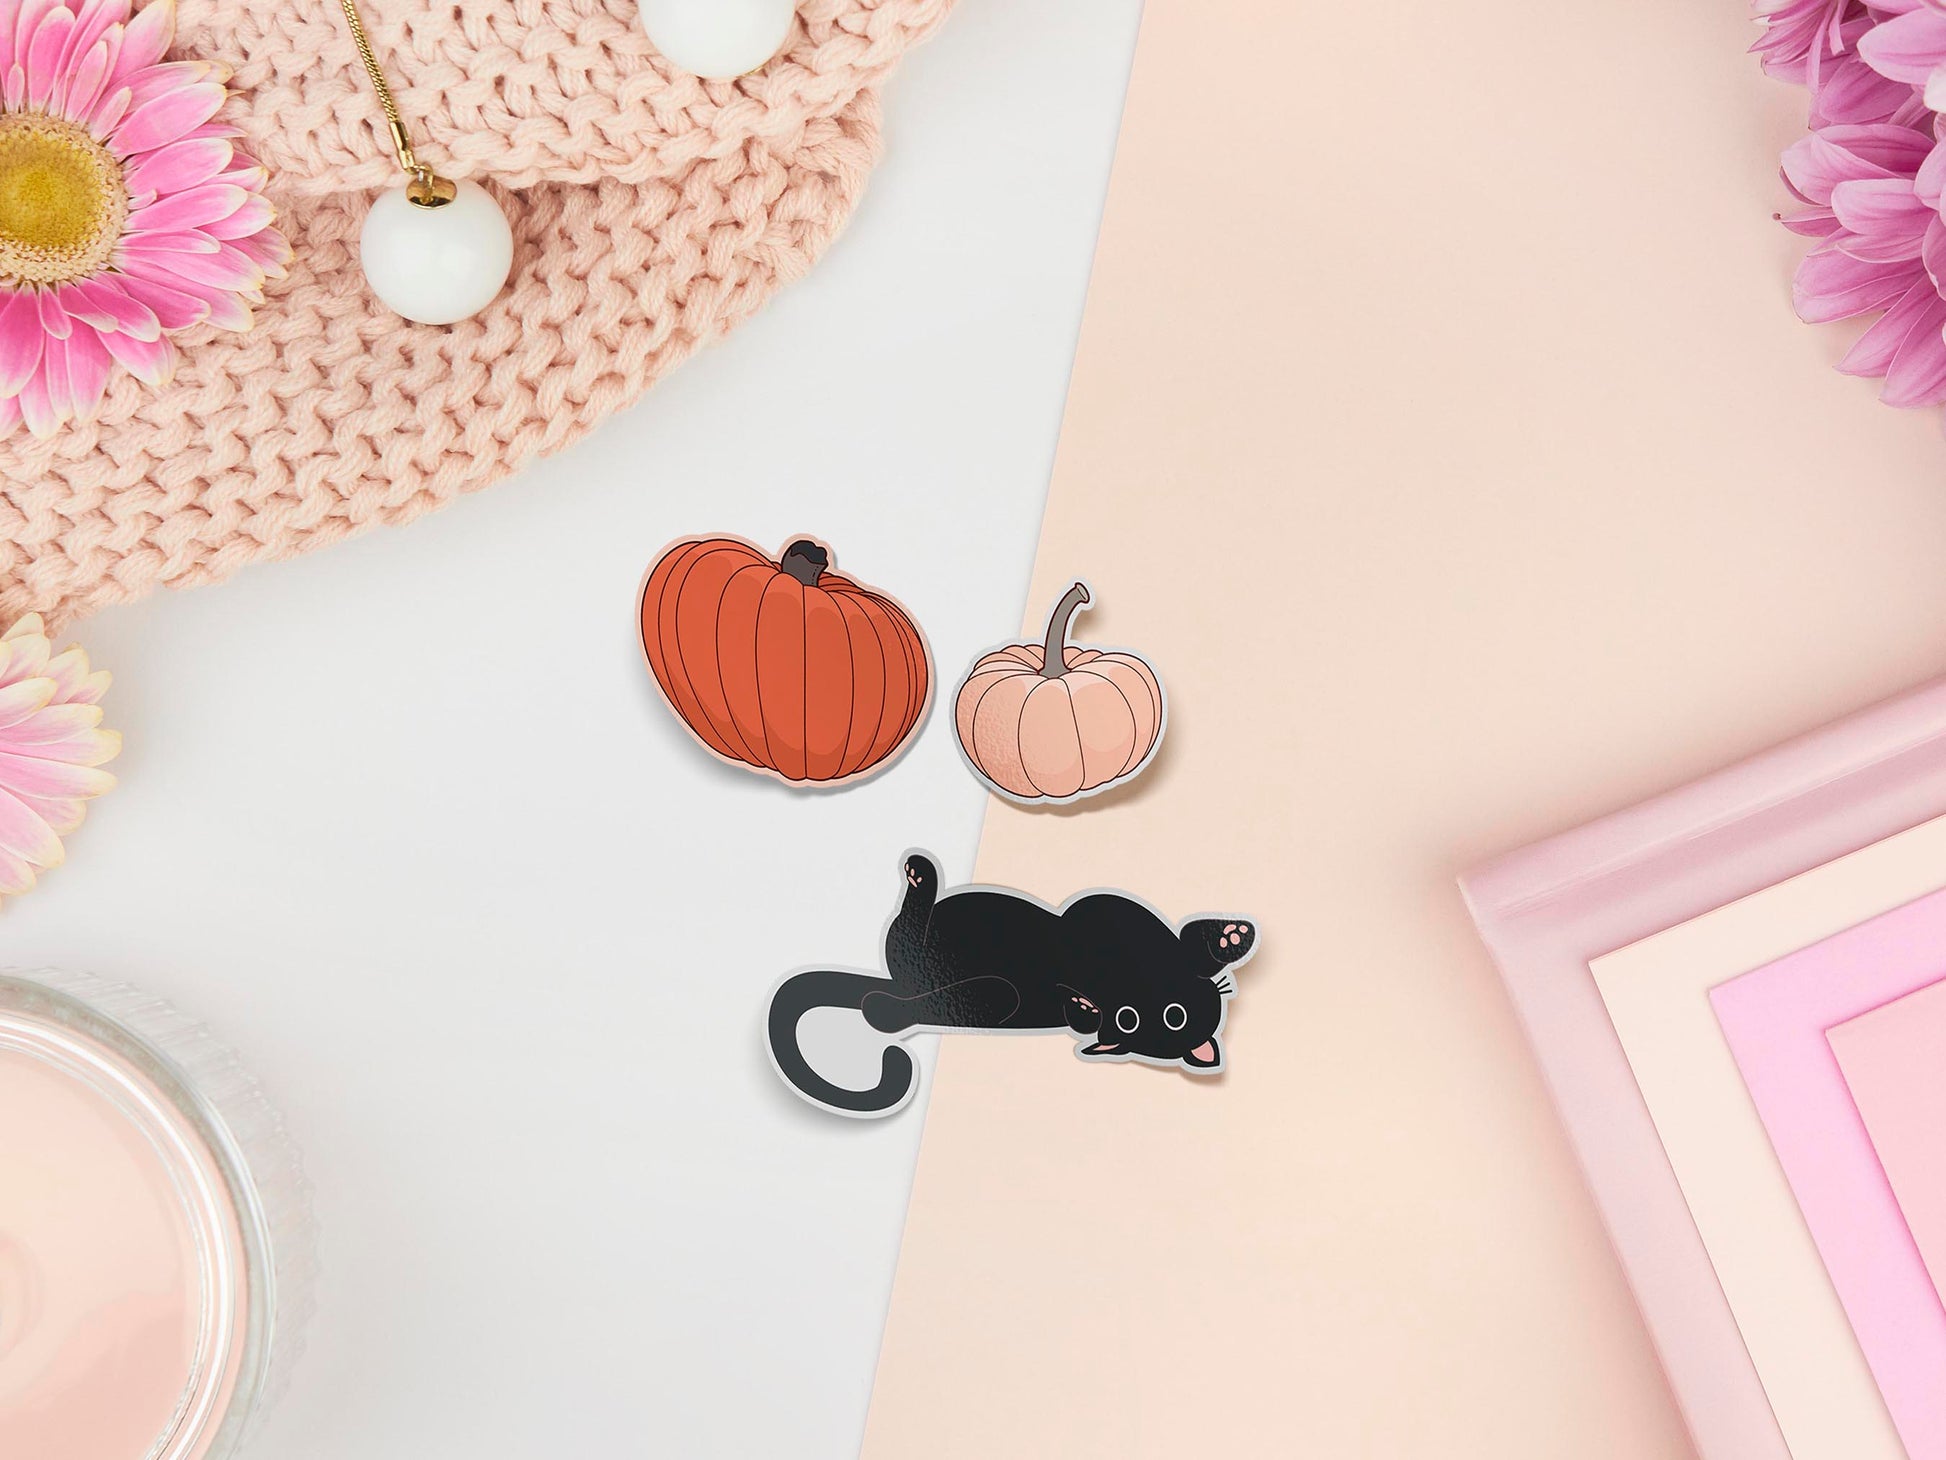 Three stickers of digital illustration cartoons of pumpkins and a playful black cat